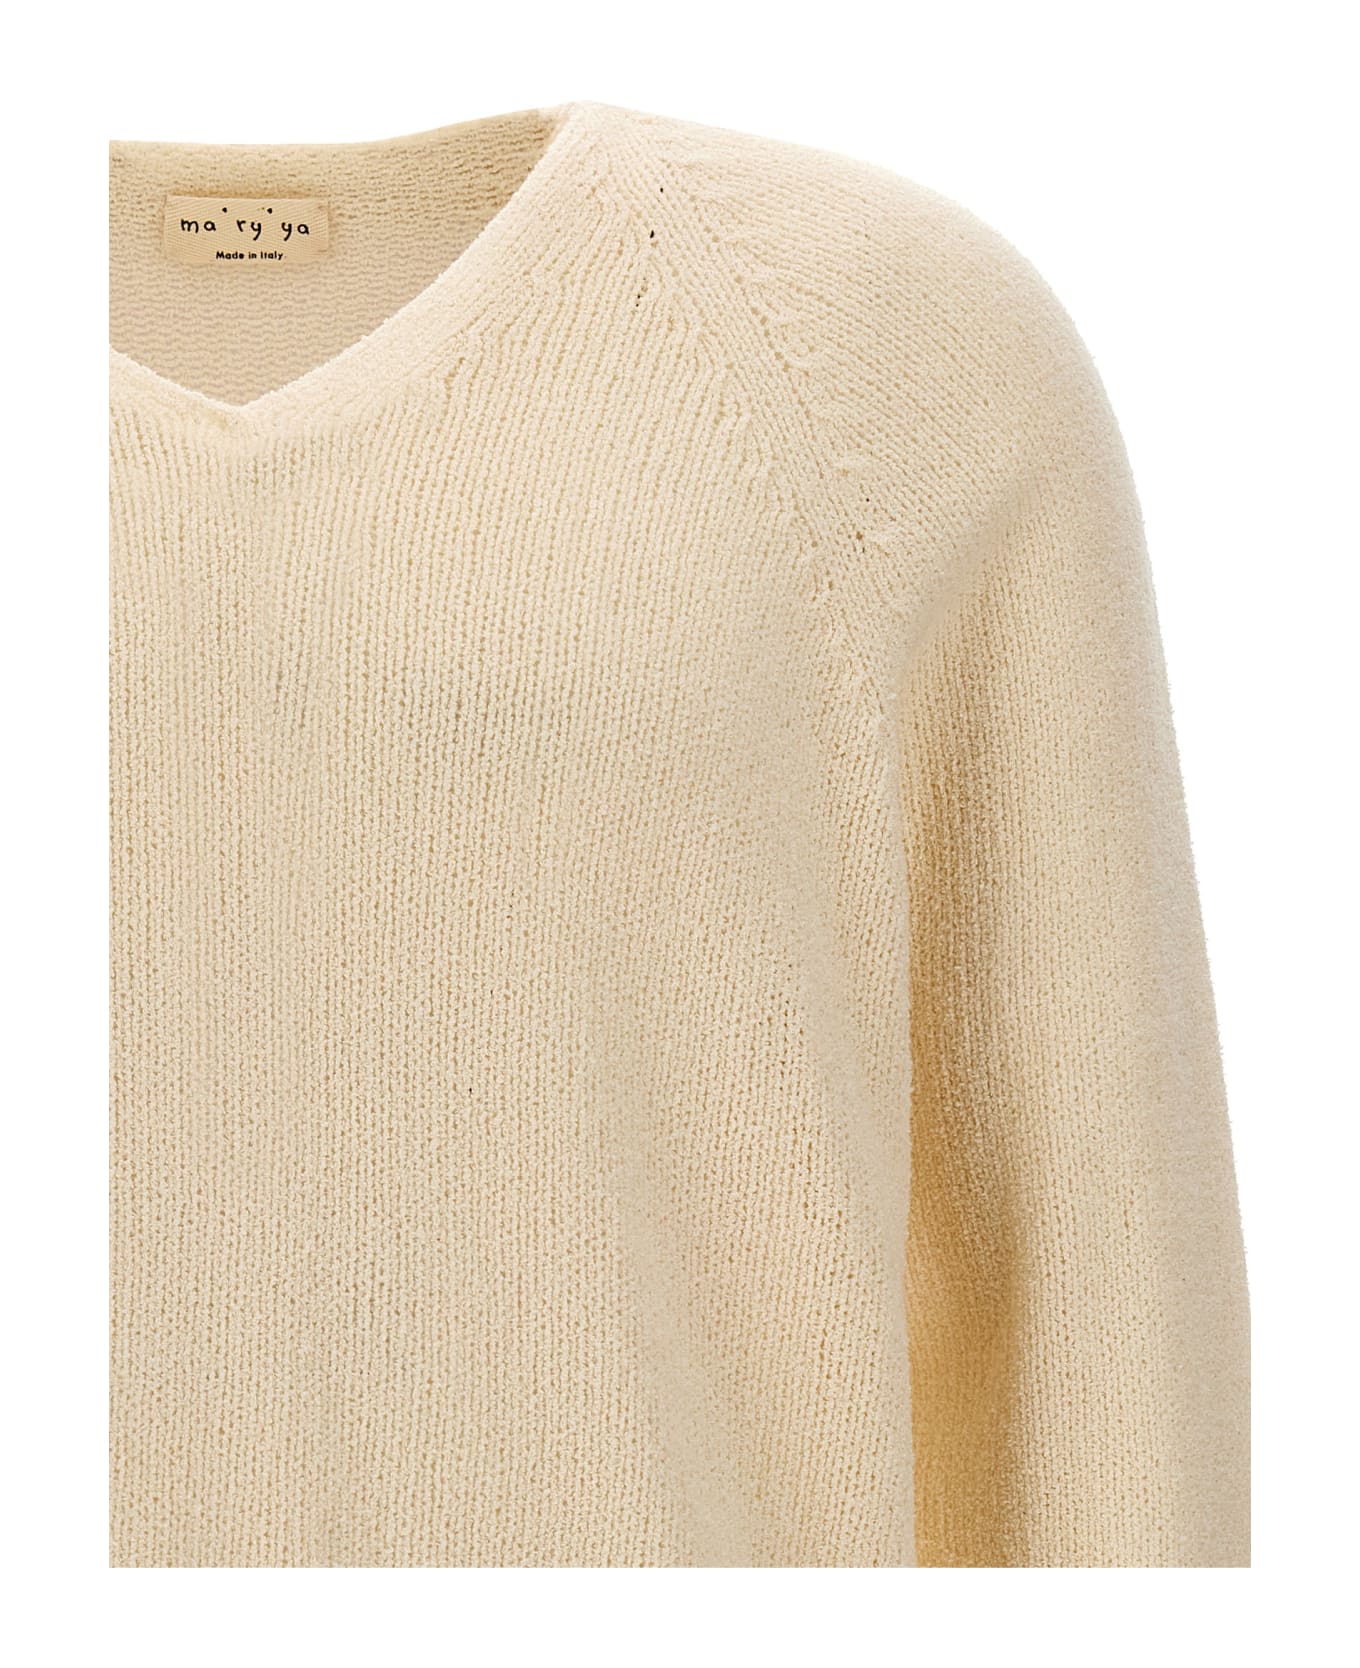 Ma'ry'ya V-neck Sweater - White